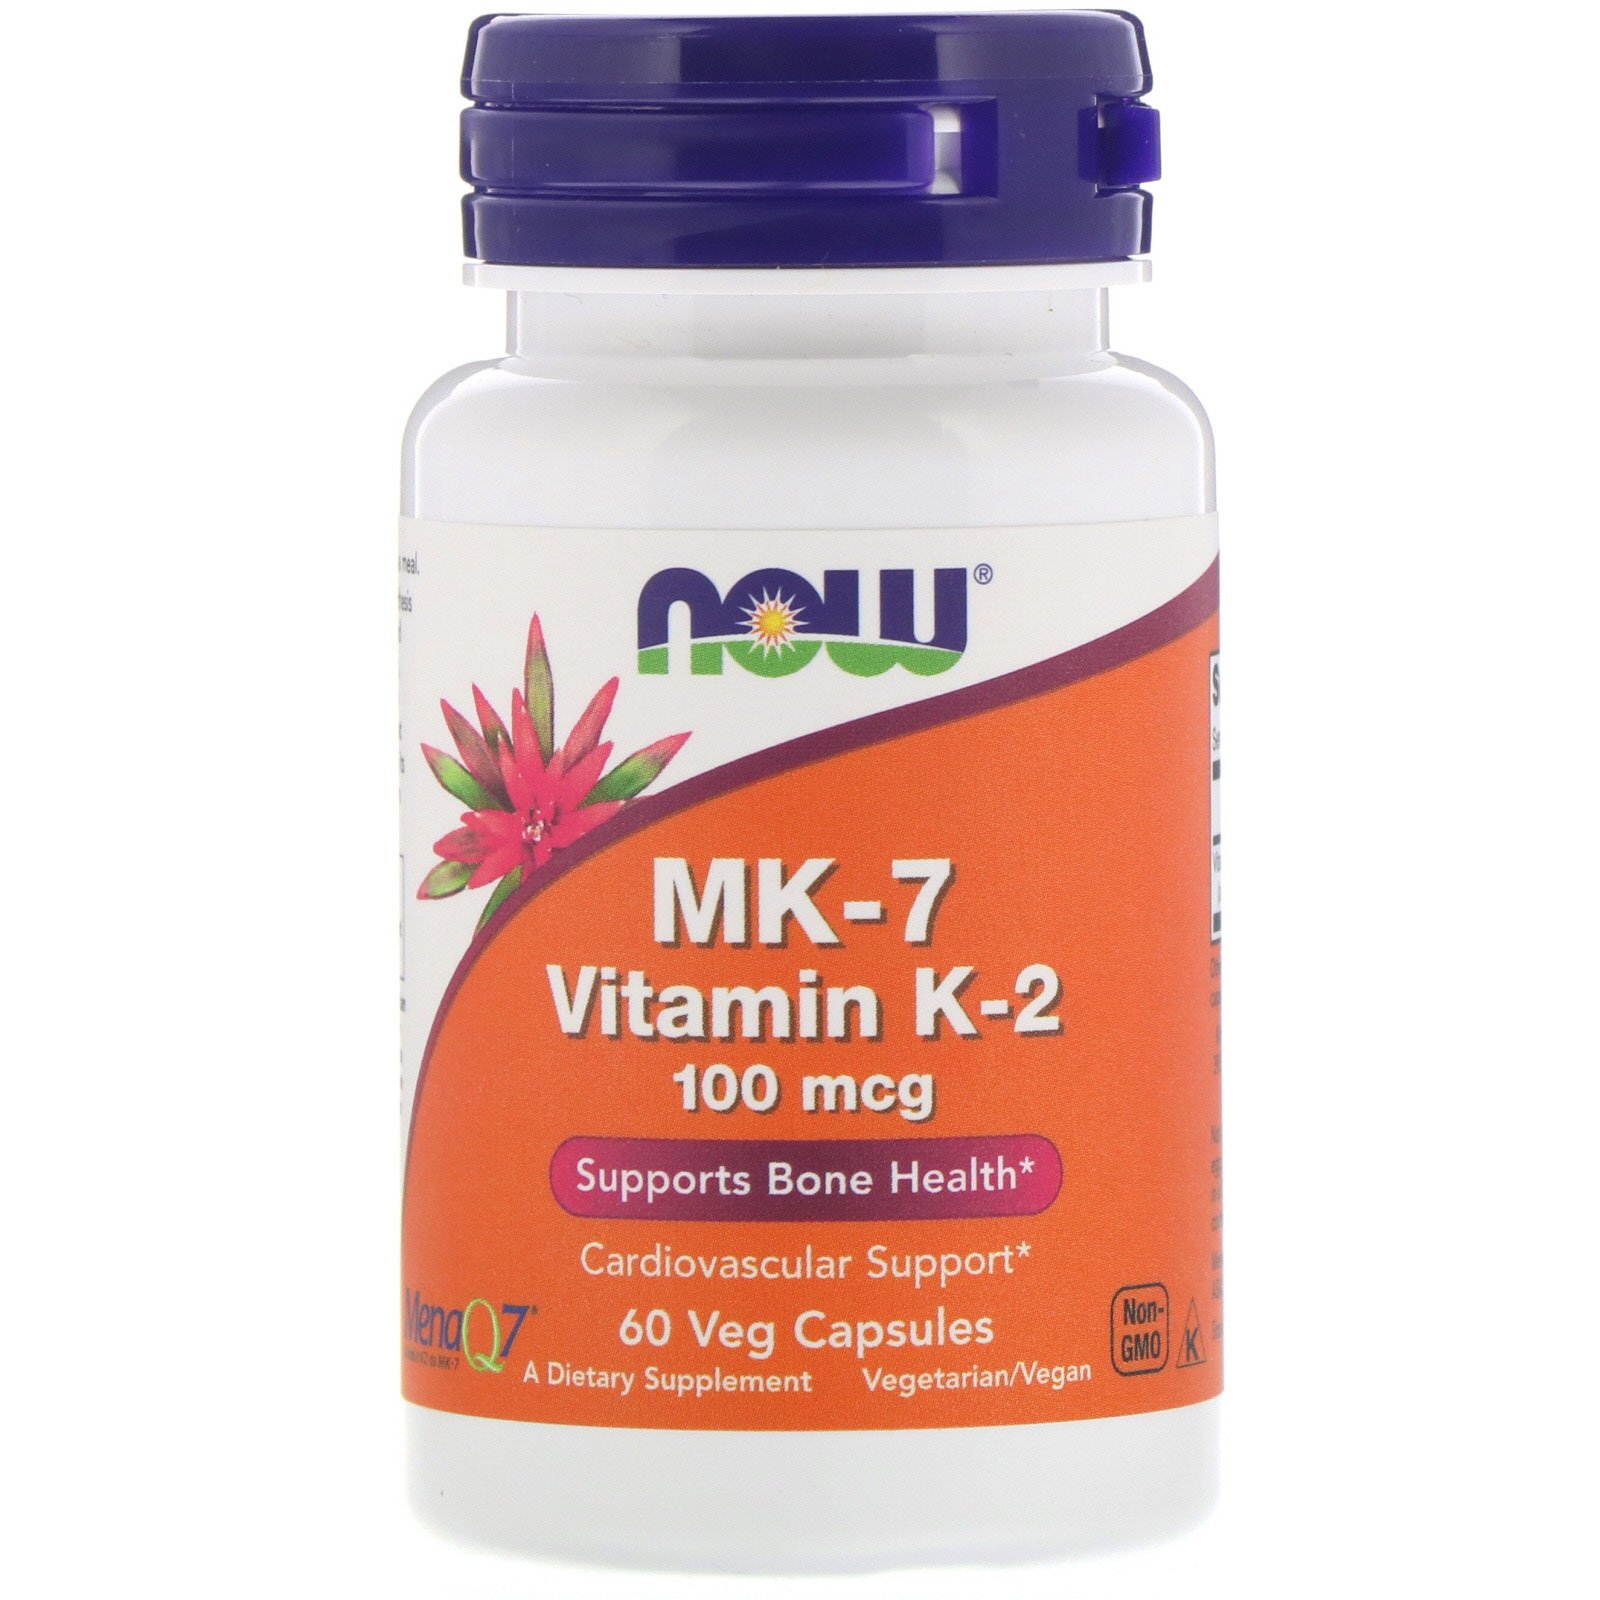 K-2 MK-7, Витамин К-2 в форме МК-7 Менахинон 100 мкг - 60 капсул